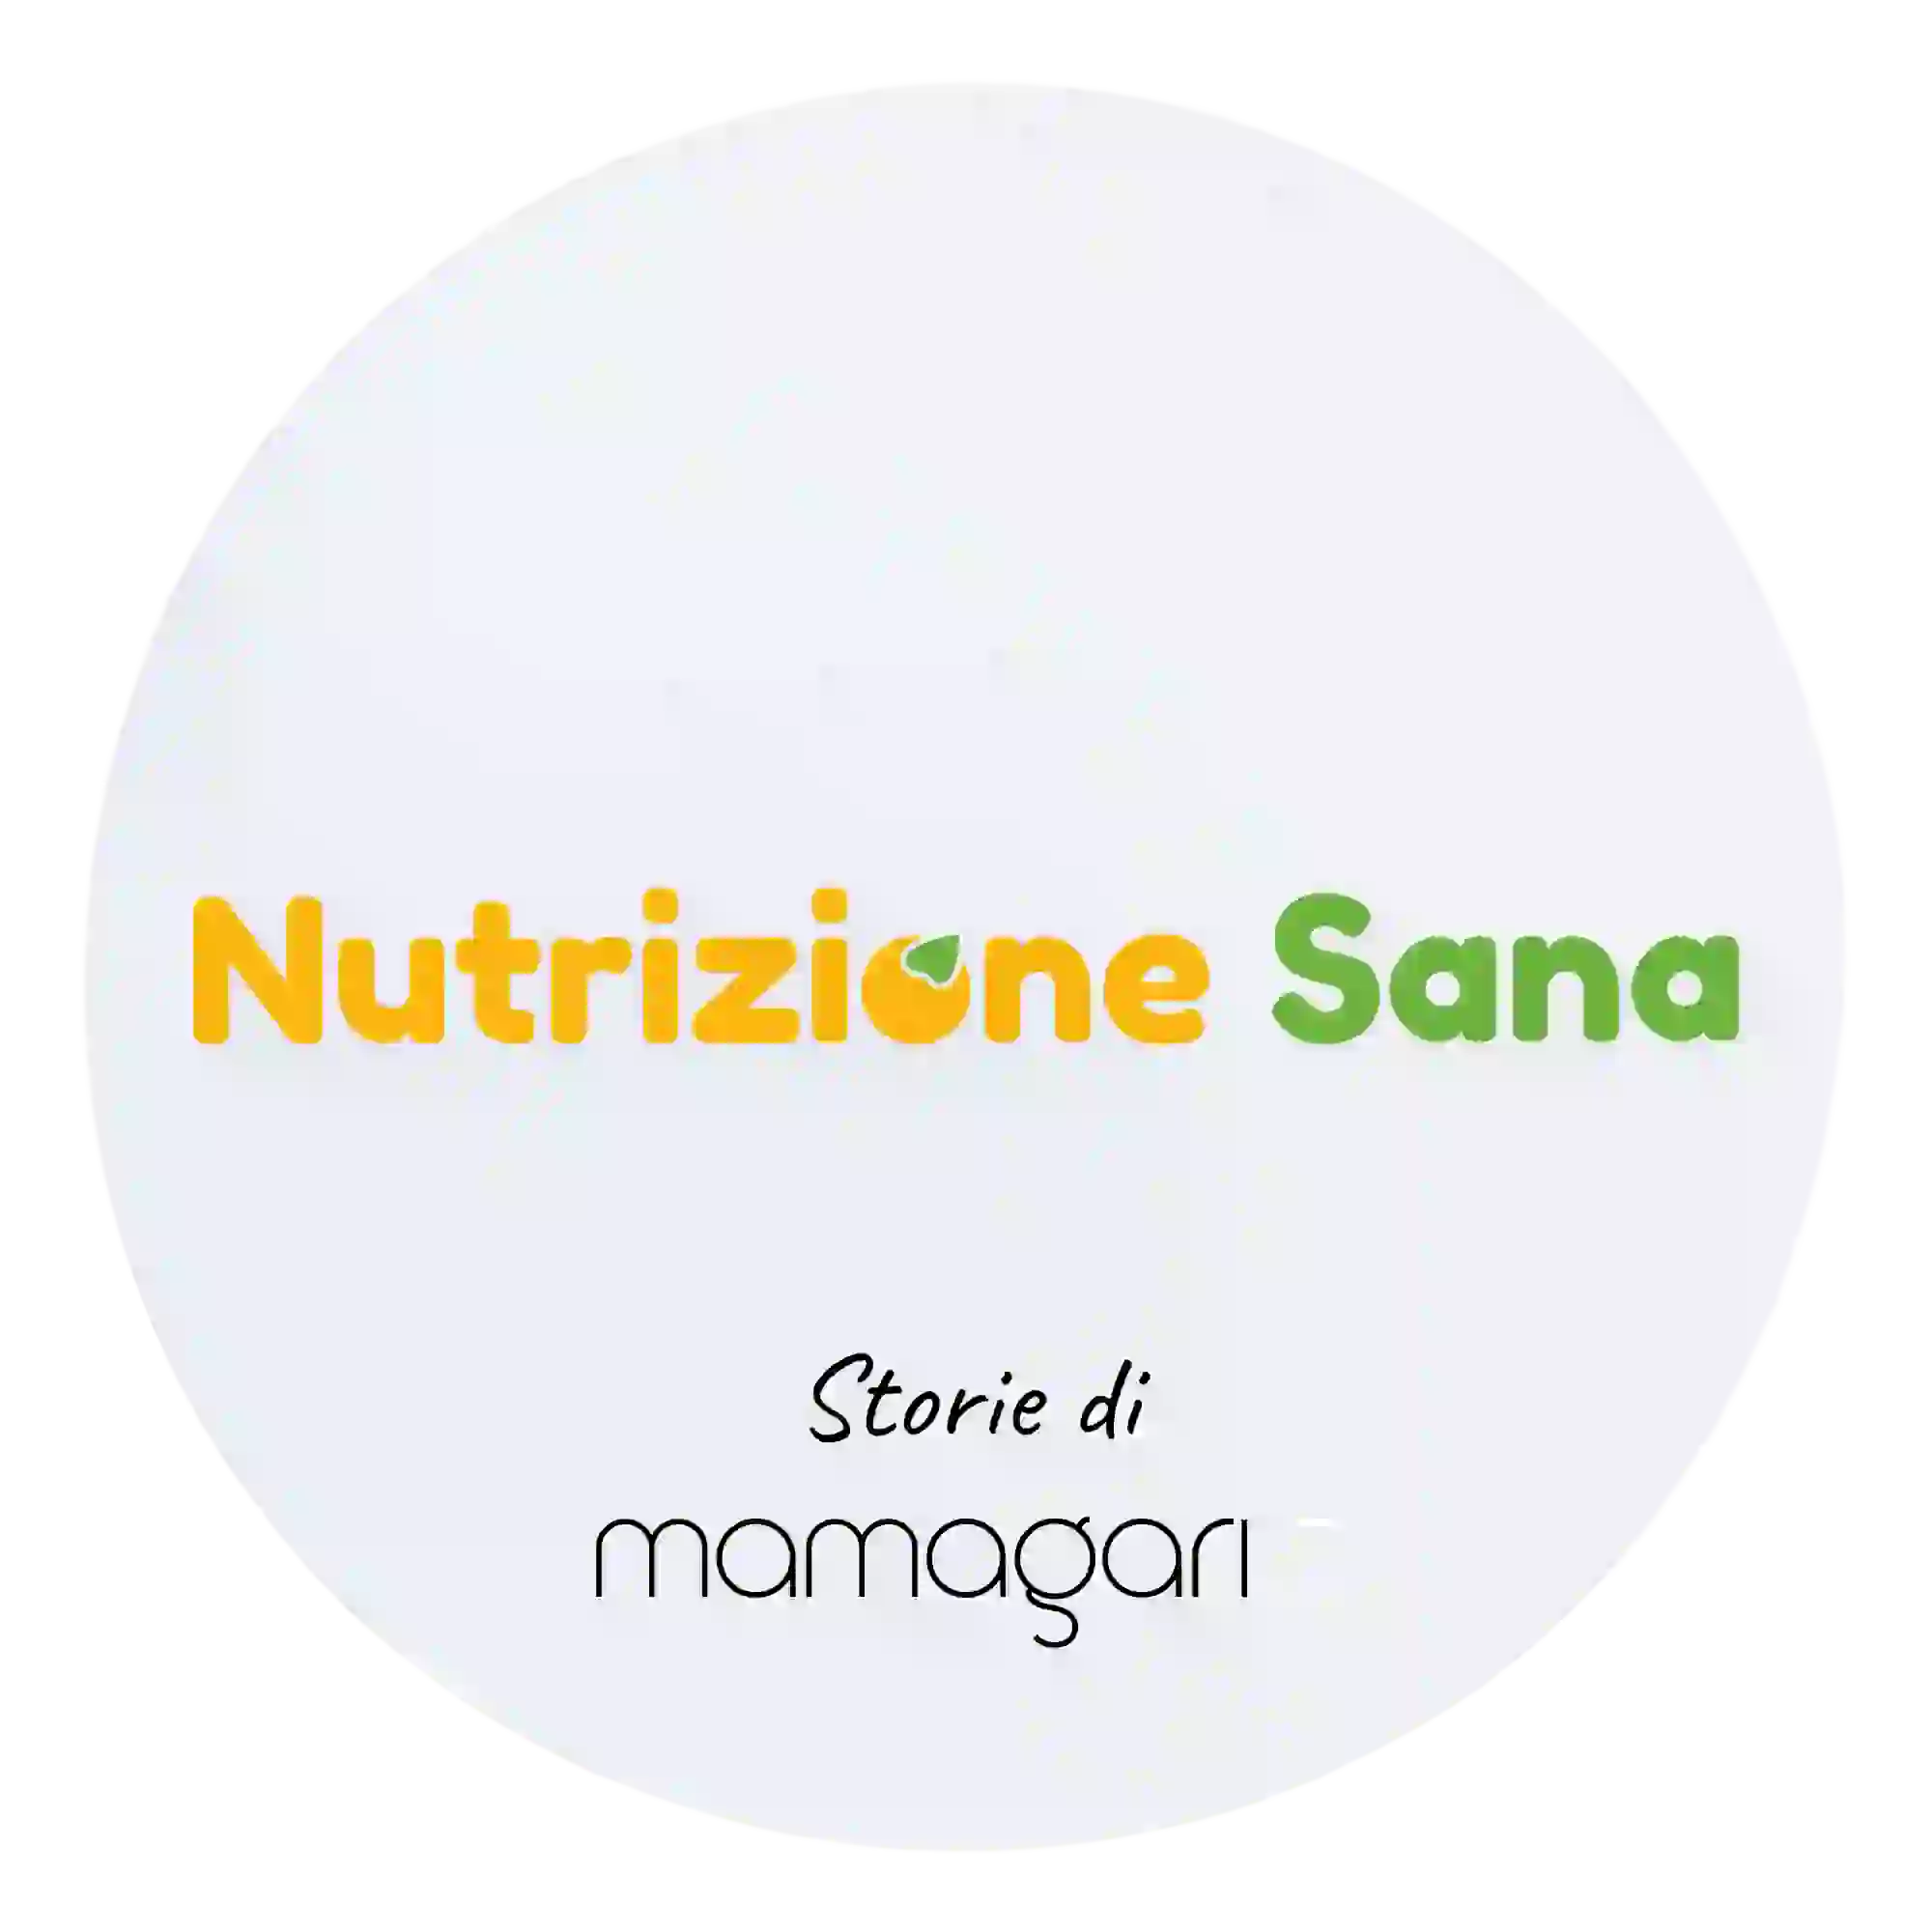 Nutrizione Sana Agenzia di web marketing italia seo google ads social e website